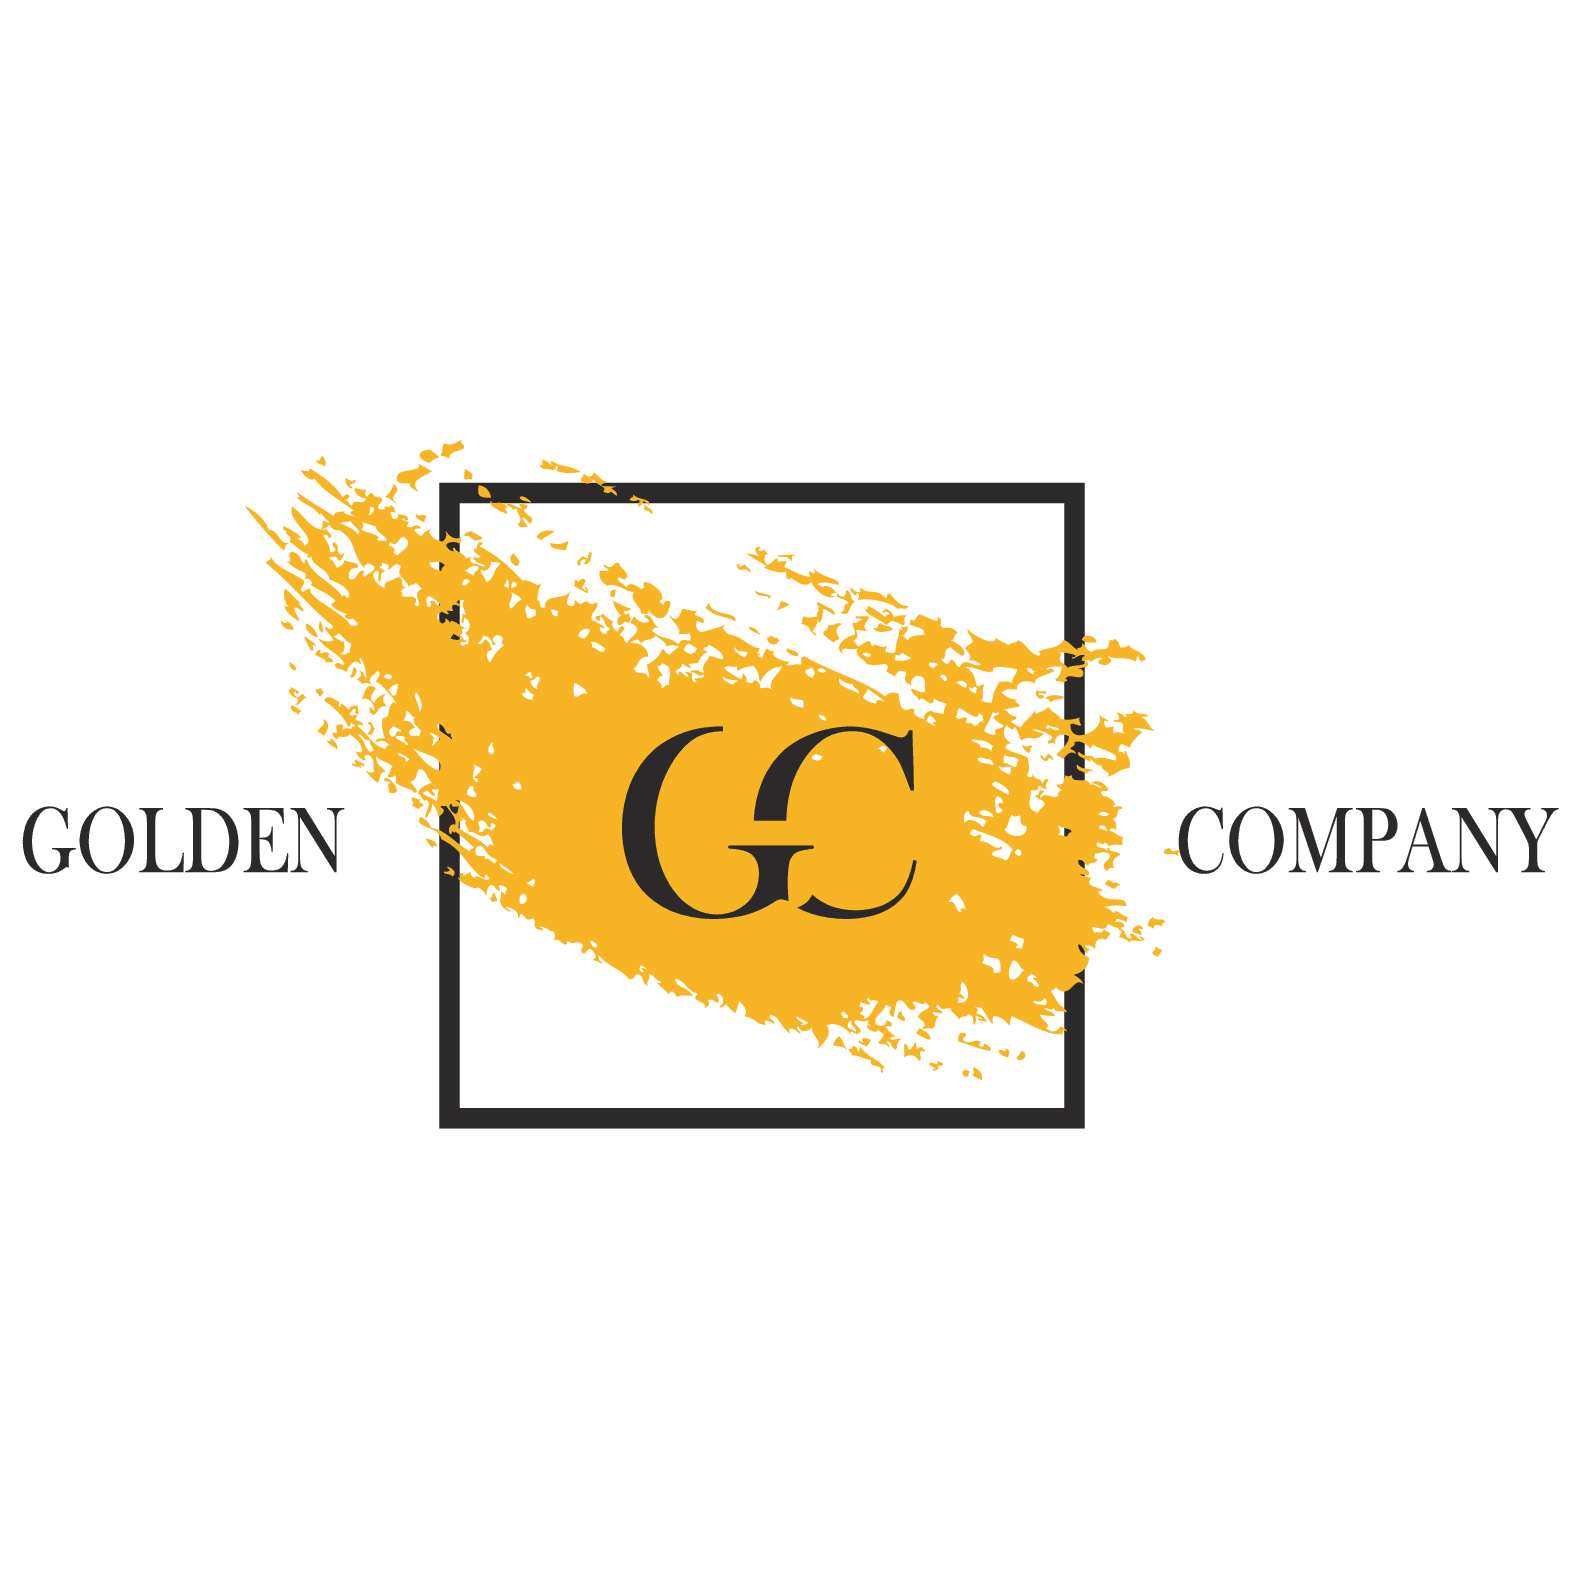 GOLDEN COMPANY